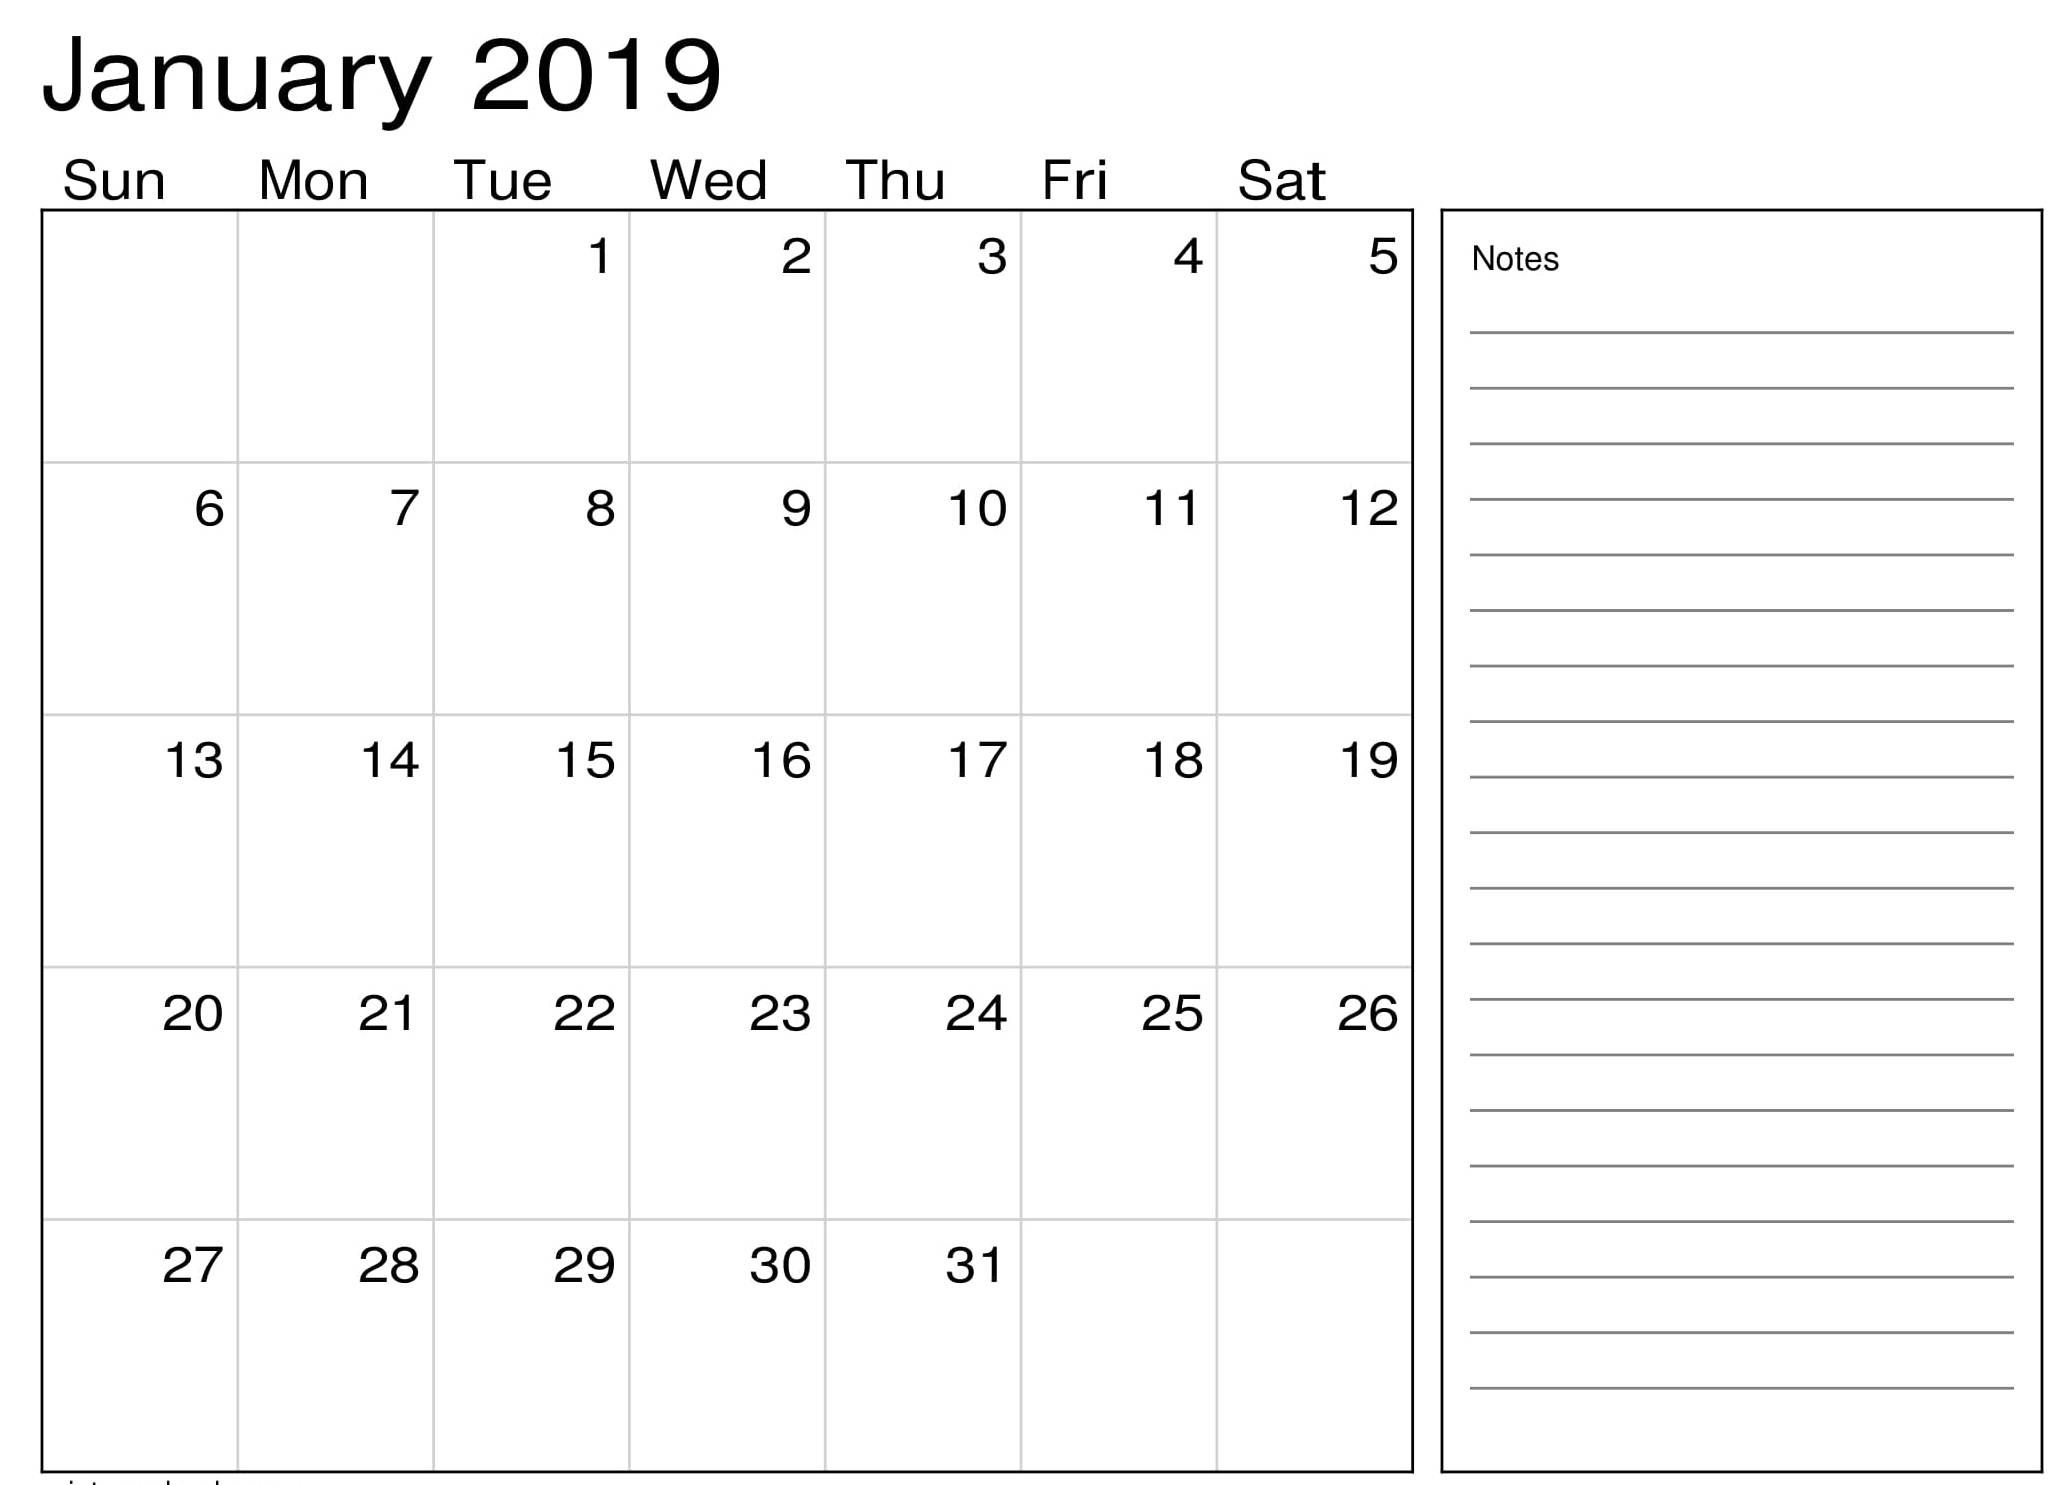 January 2019 Calendar Pdf With Notes | Calendar 2019